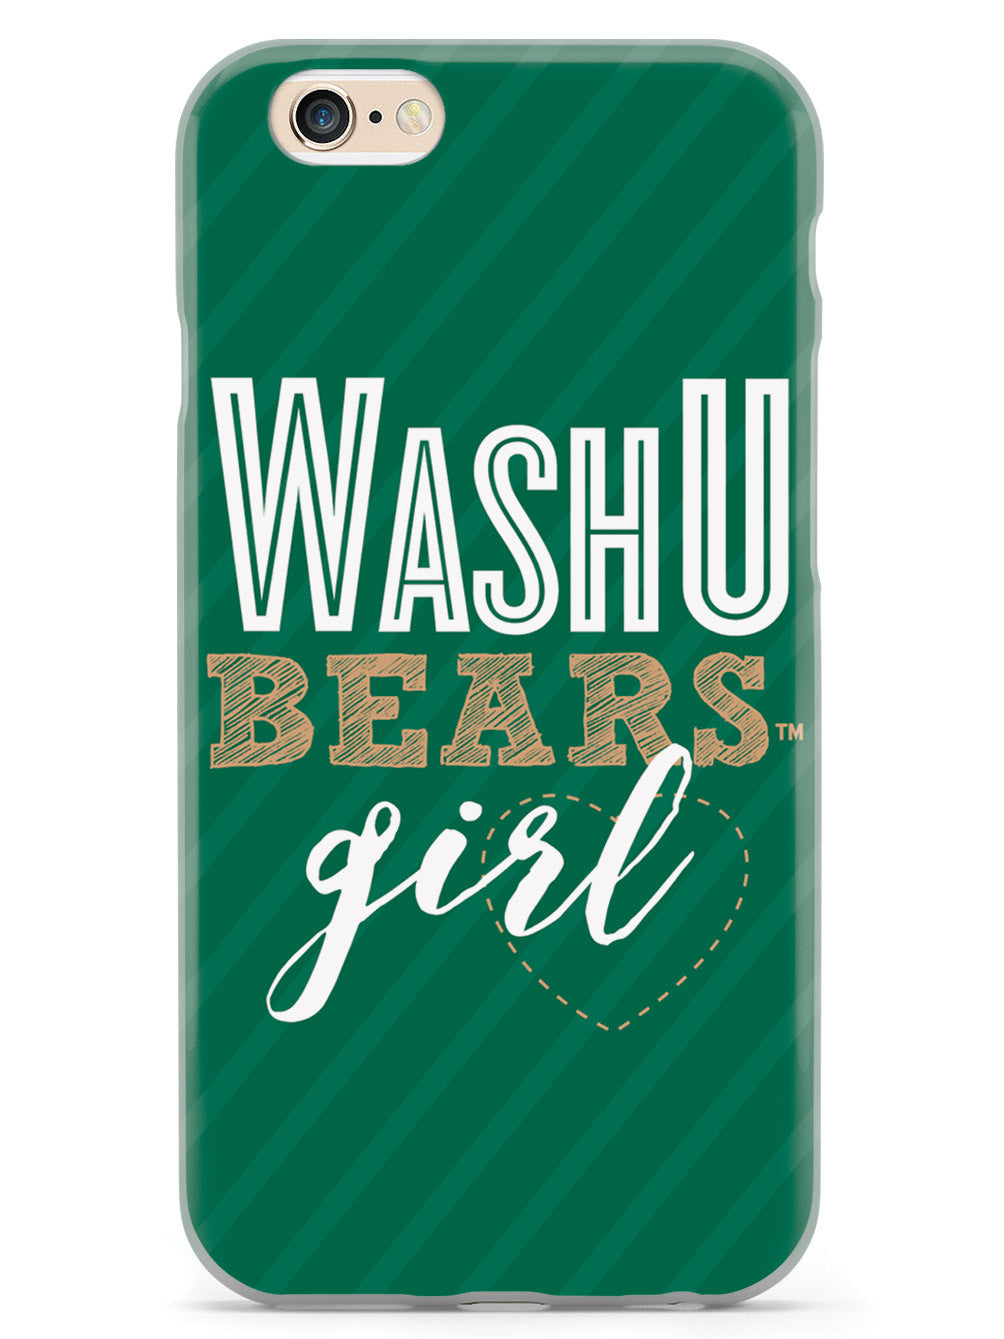 Wash U Bears Girl Case